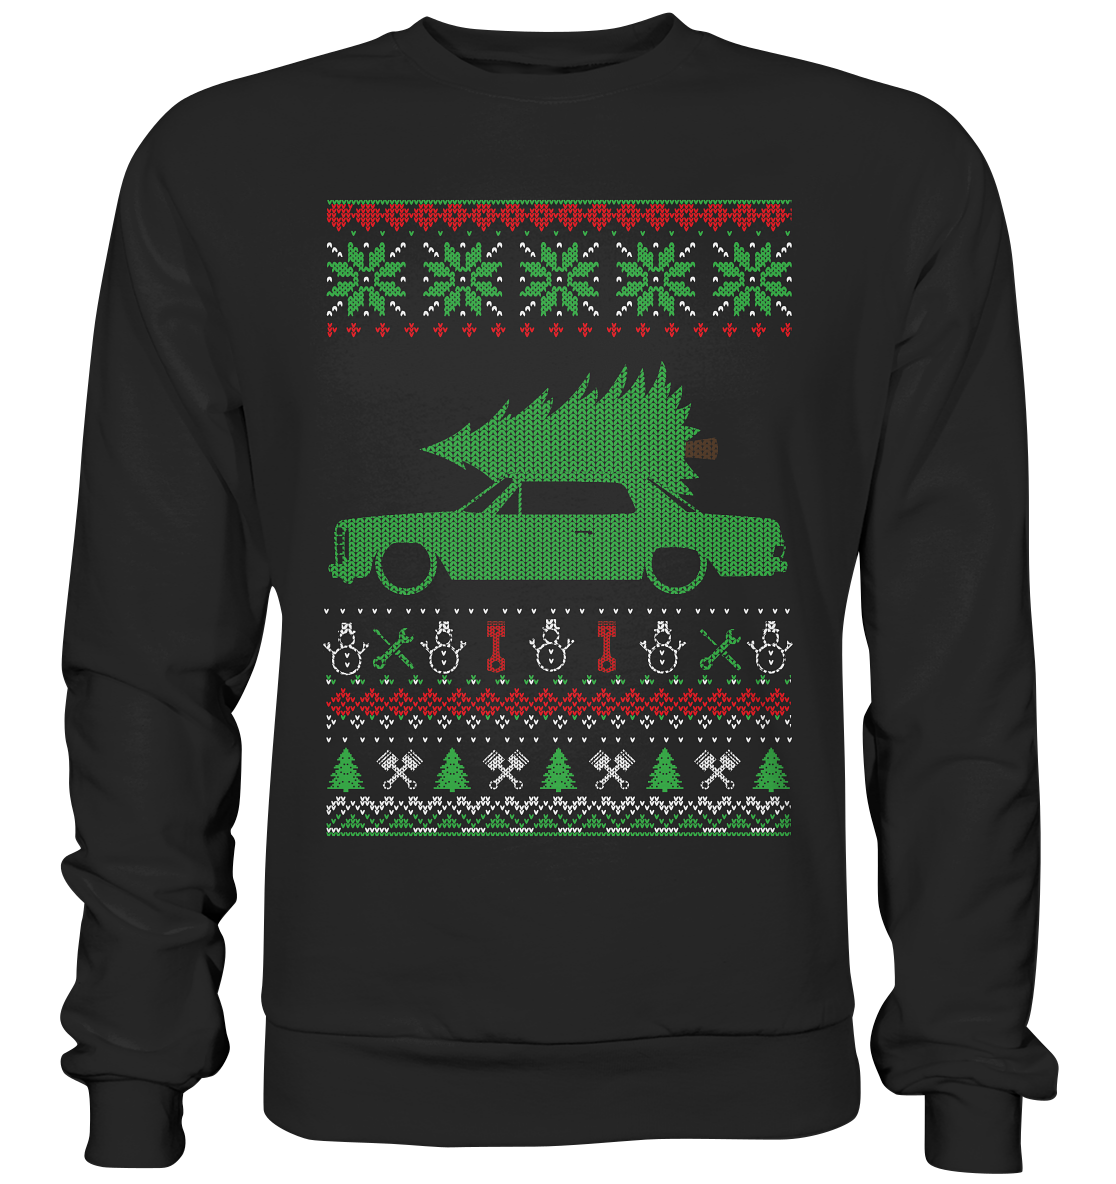 CODUGLY_MGKW114115 - Premium Sweatshirt